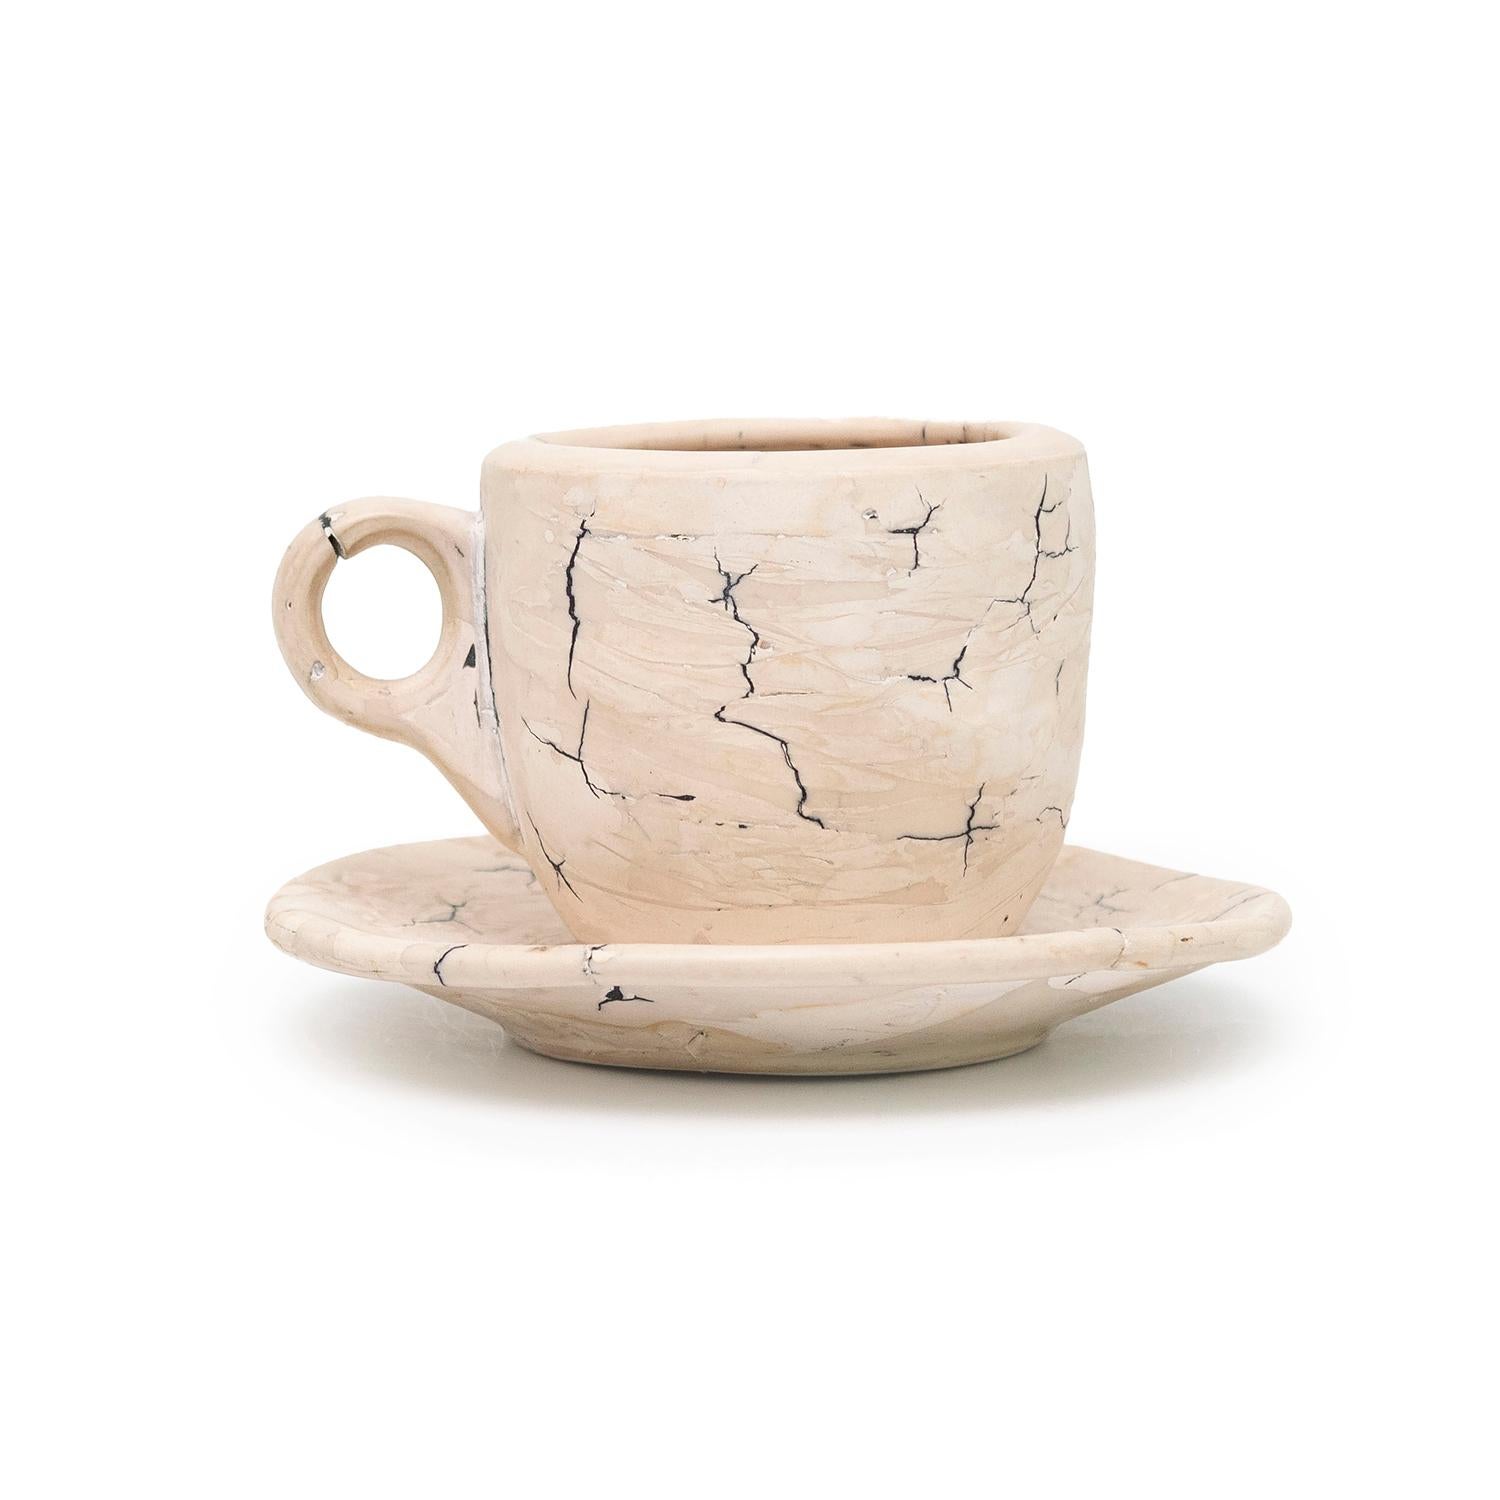 Irv Tepper
Cup and Saucer
porcelain, glaze
3.25 x 5.25 x 5.25